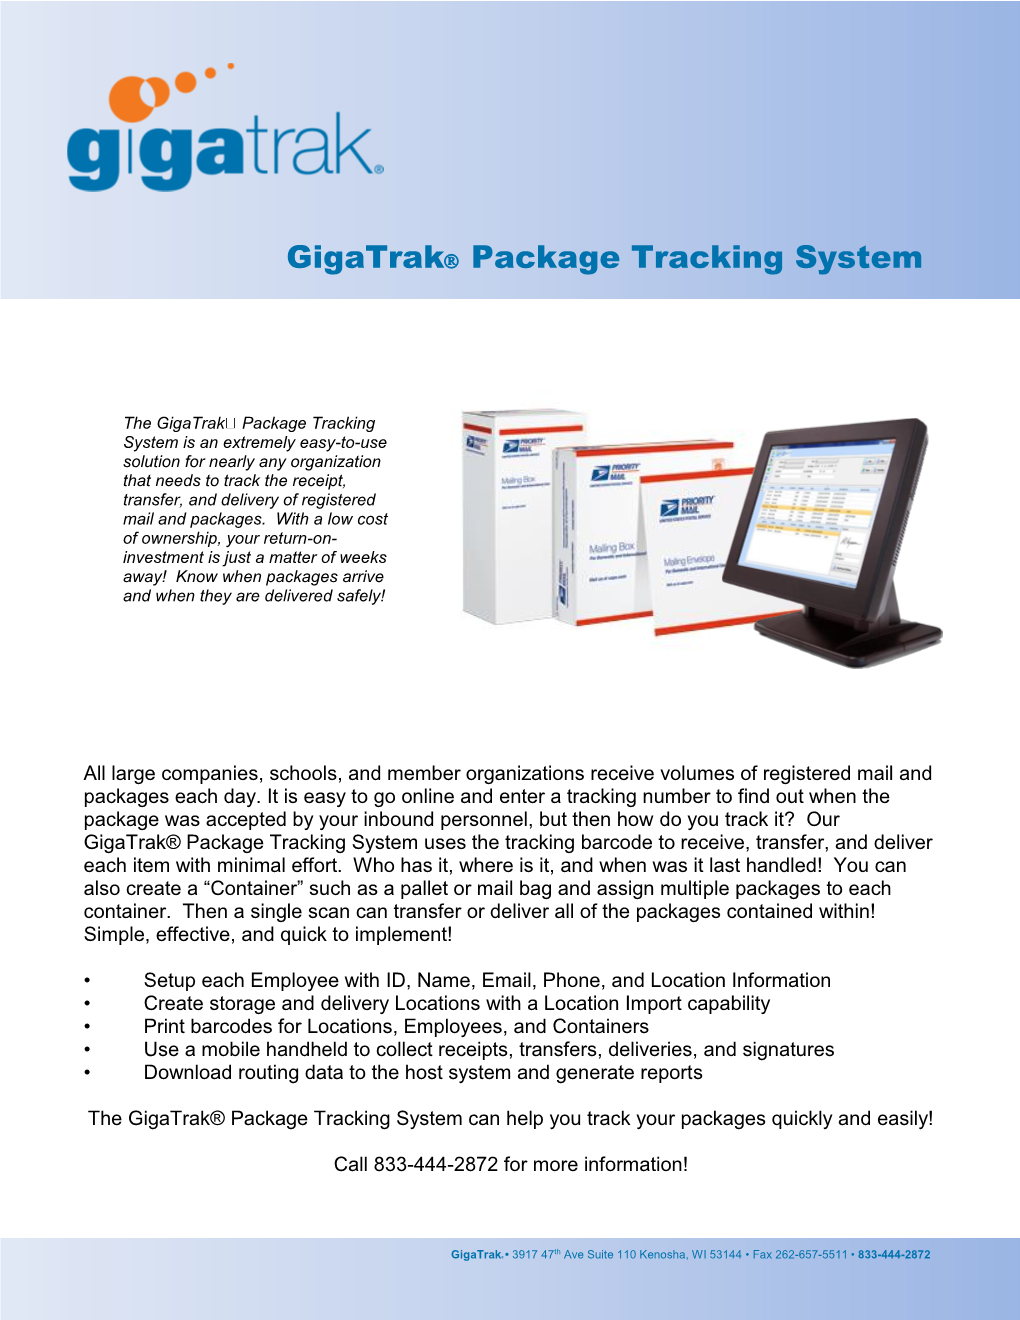 Gigatrak Package Tracking System